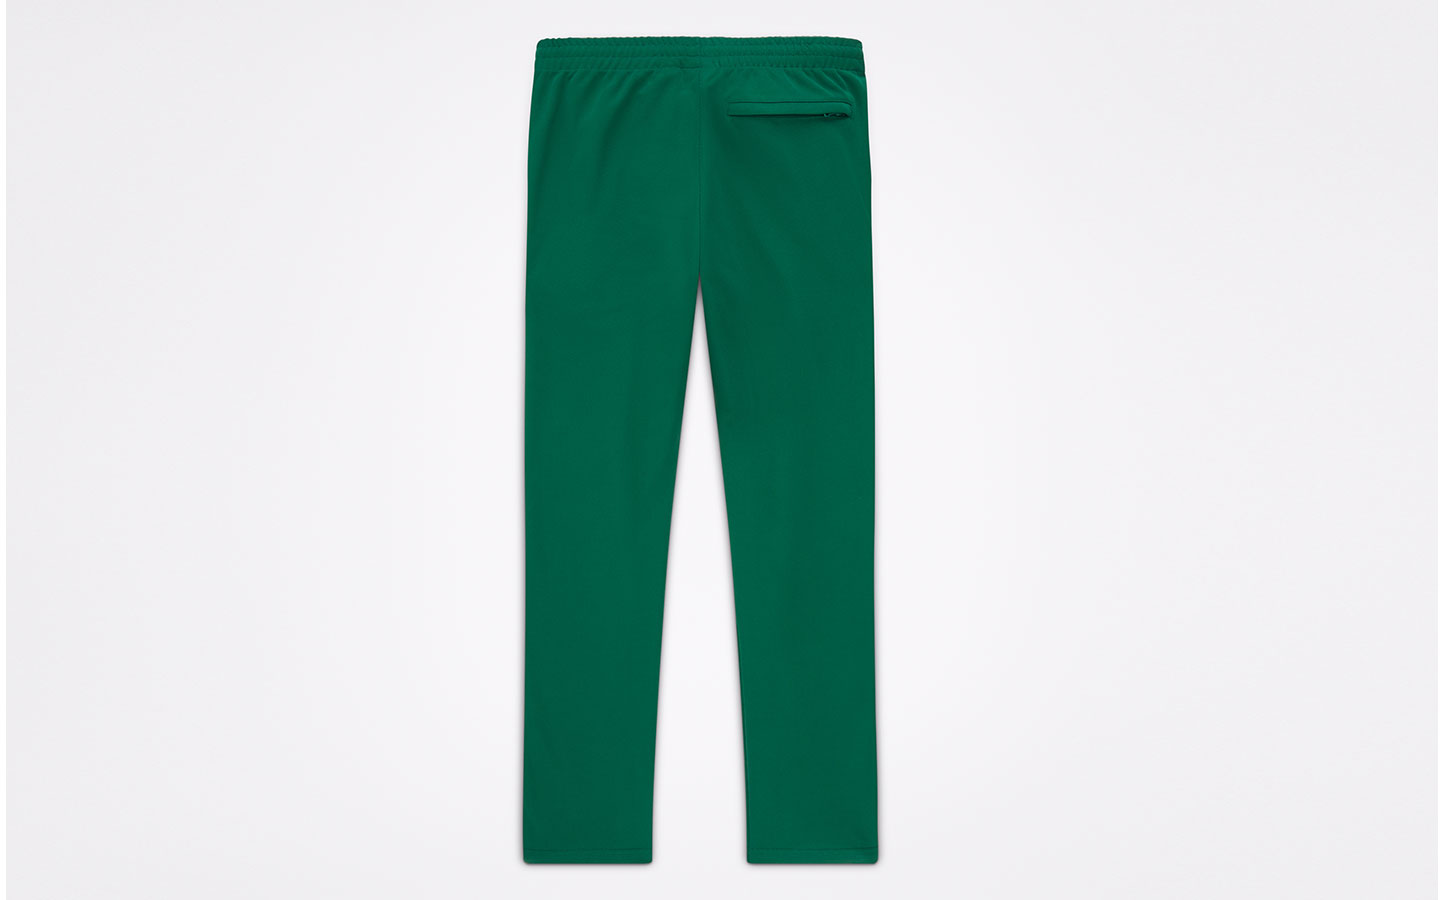 Pantalon Jfg Converse Hombre Verde 2